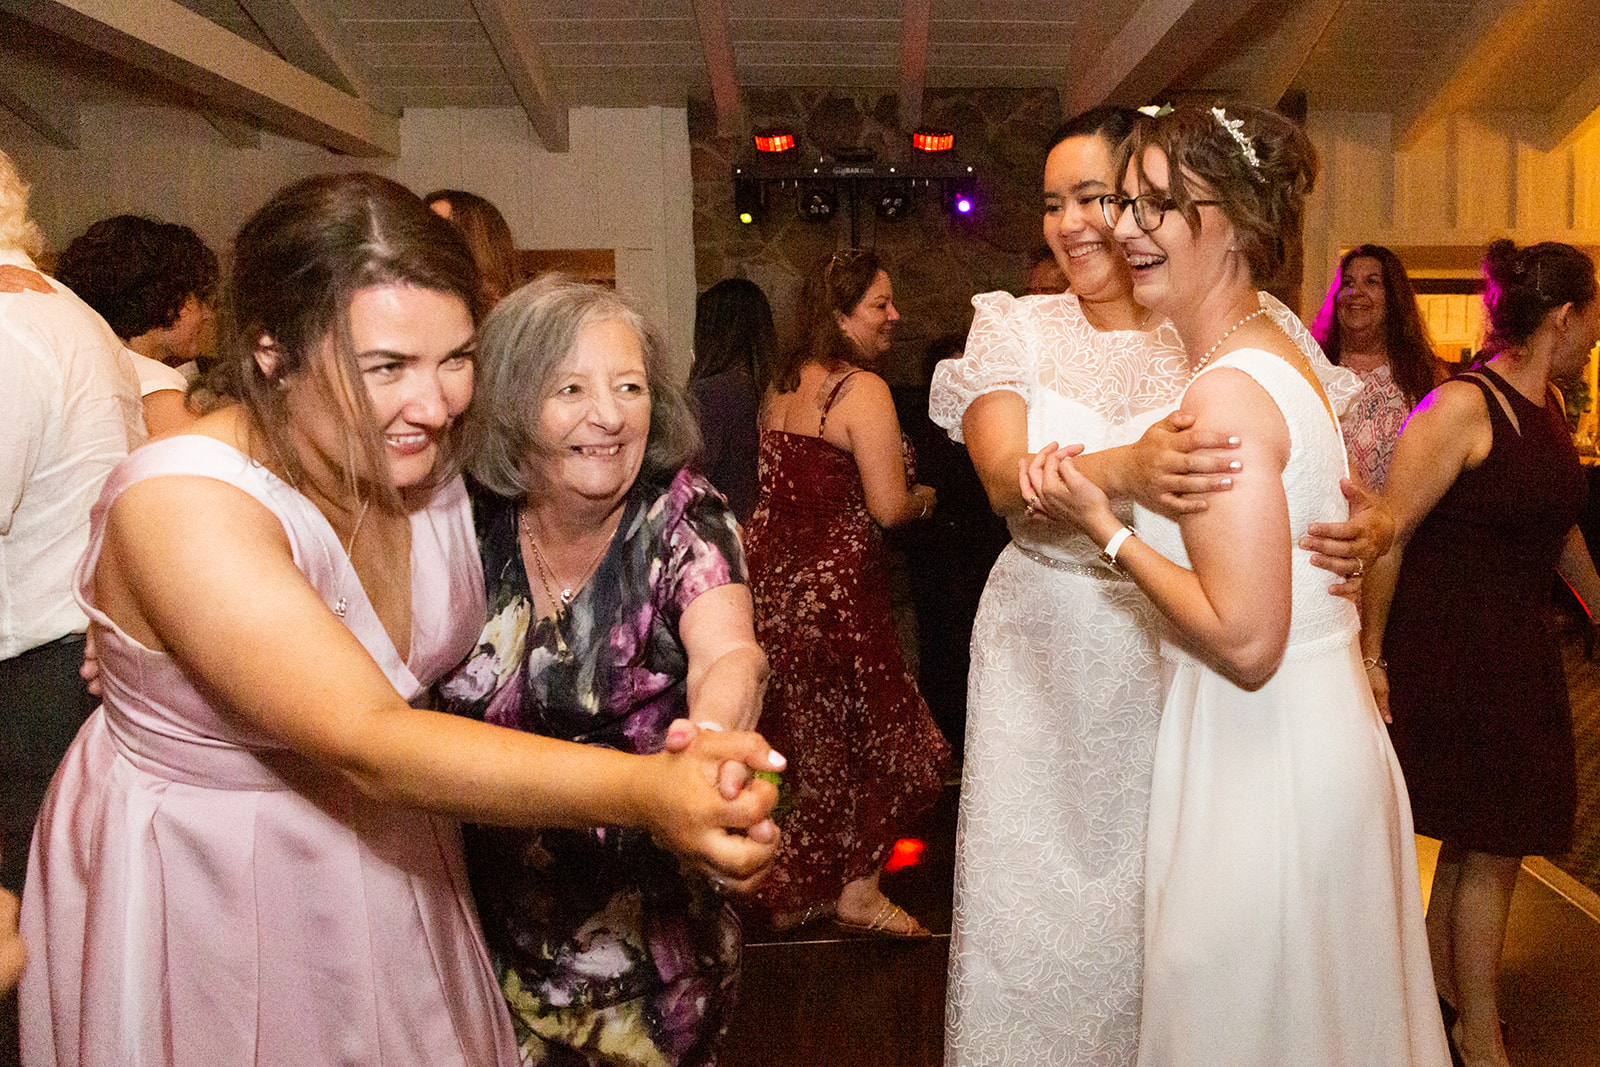 Dance floor photos from lesbian wedding reception